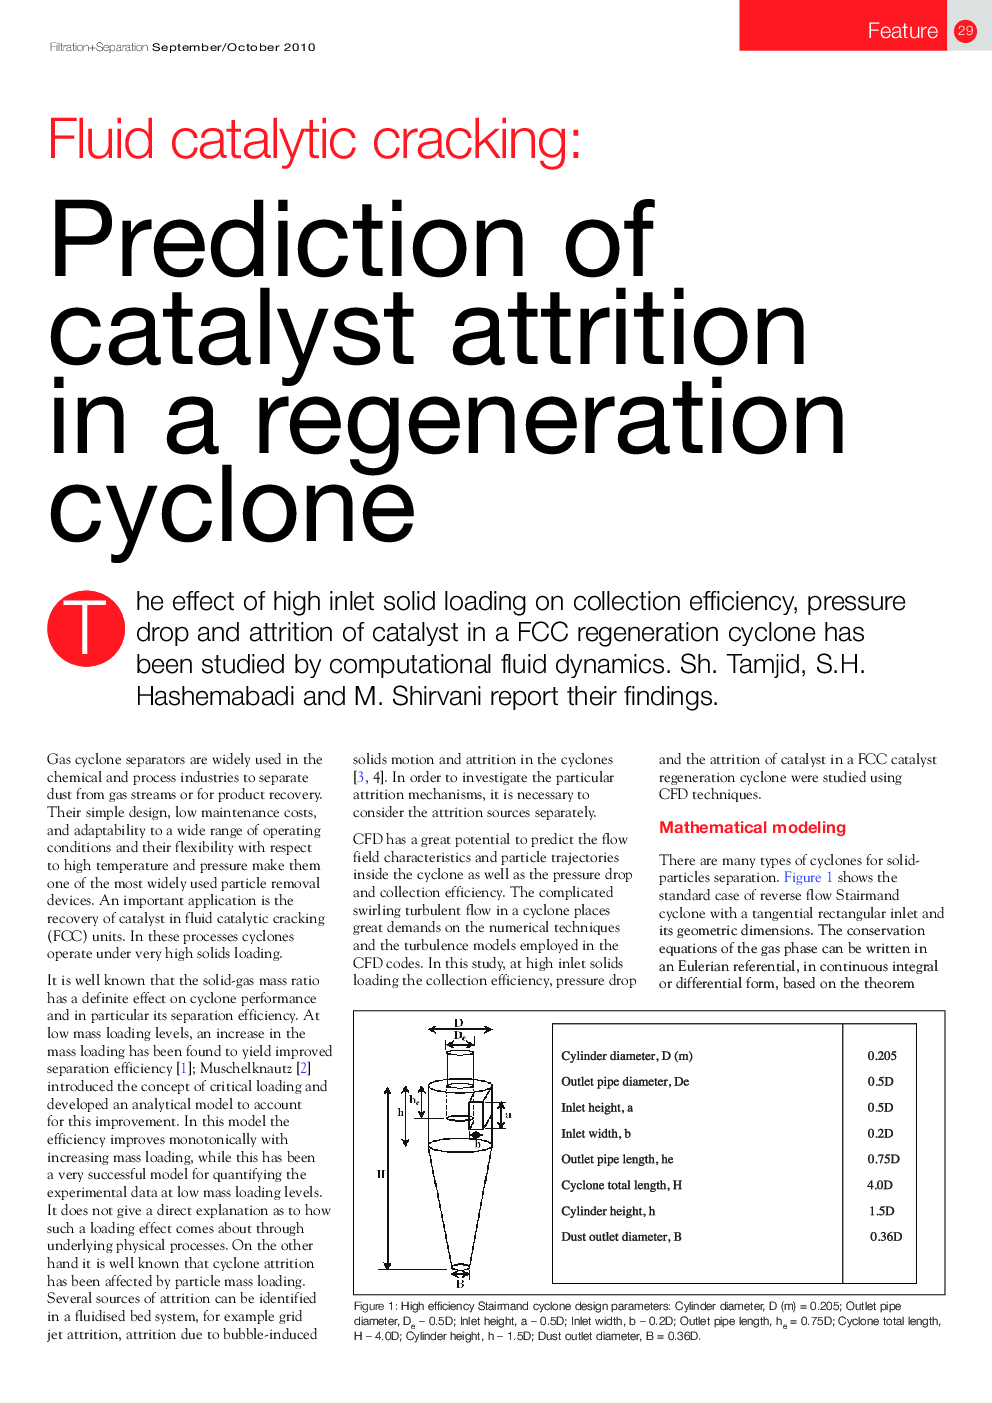 Prediction of catalyst attrition in a regeneration cyclone